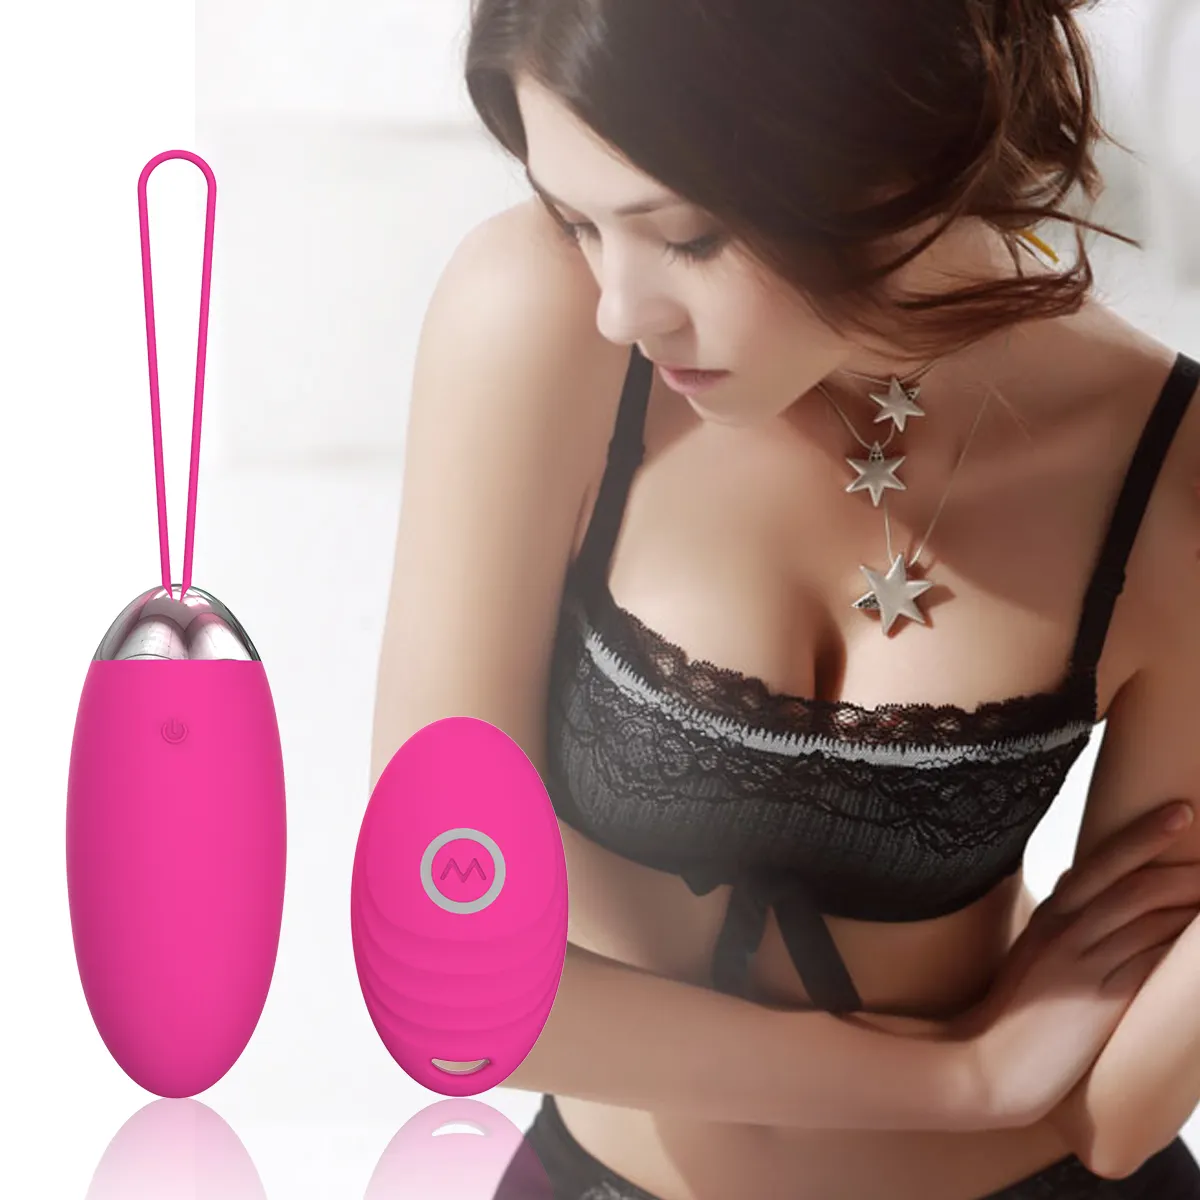 doll pussi mold lmr240 vibrators realistic butt massager toys ring sexuales Masturbators vibrator adult sex toys for woman